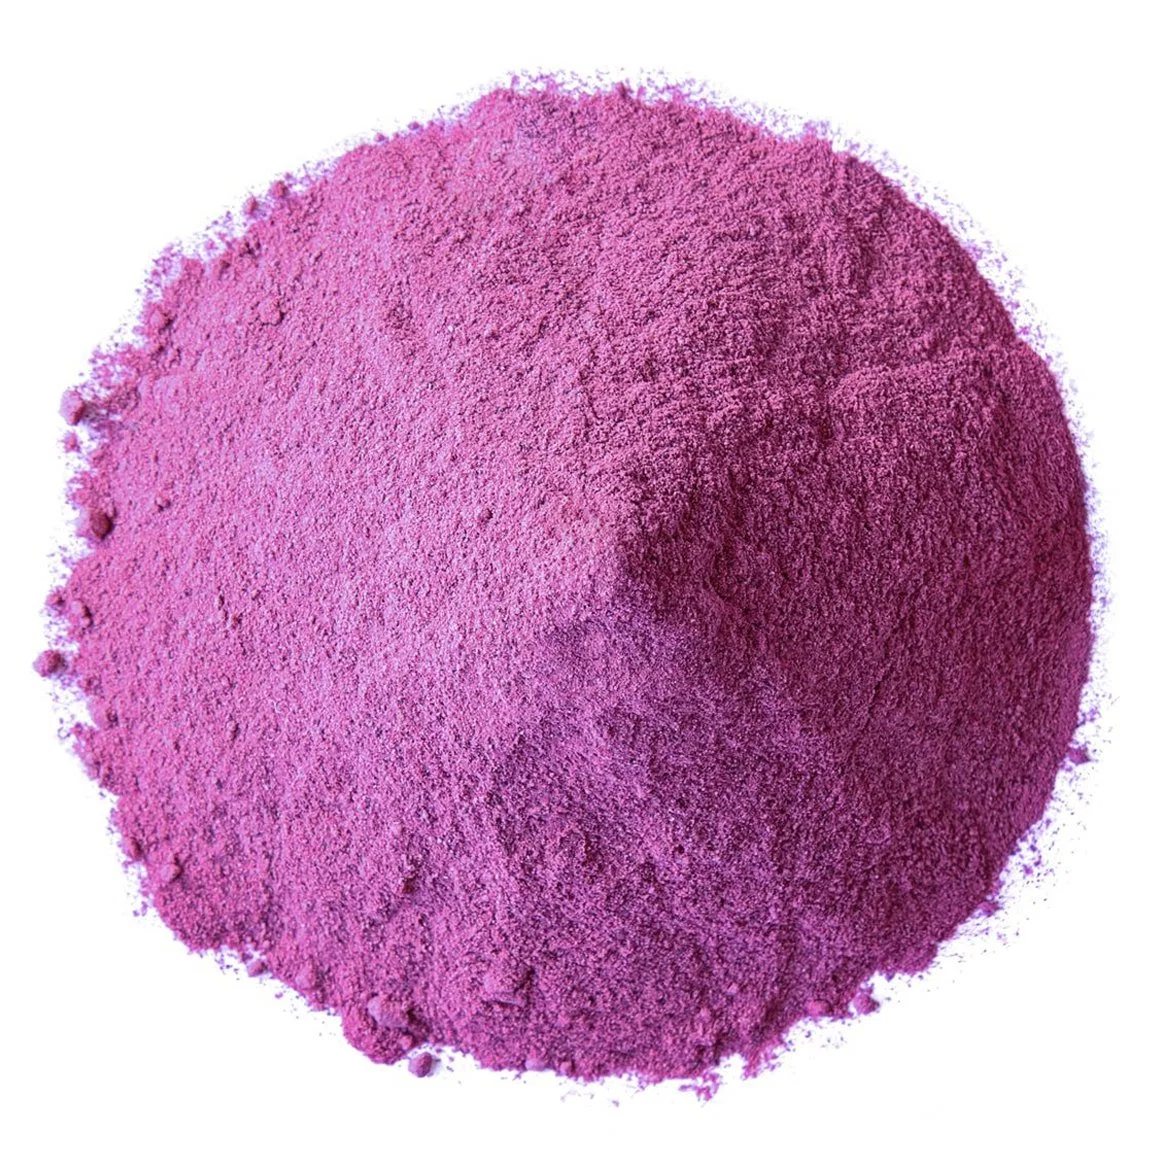 Purple Sweet Potato Powder Natural Herbal Plant Extract